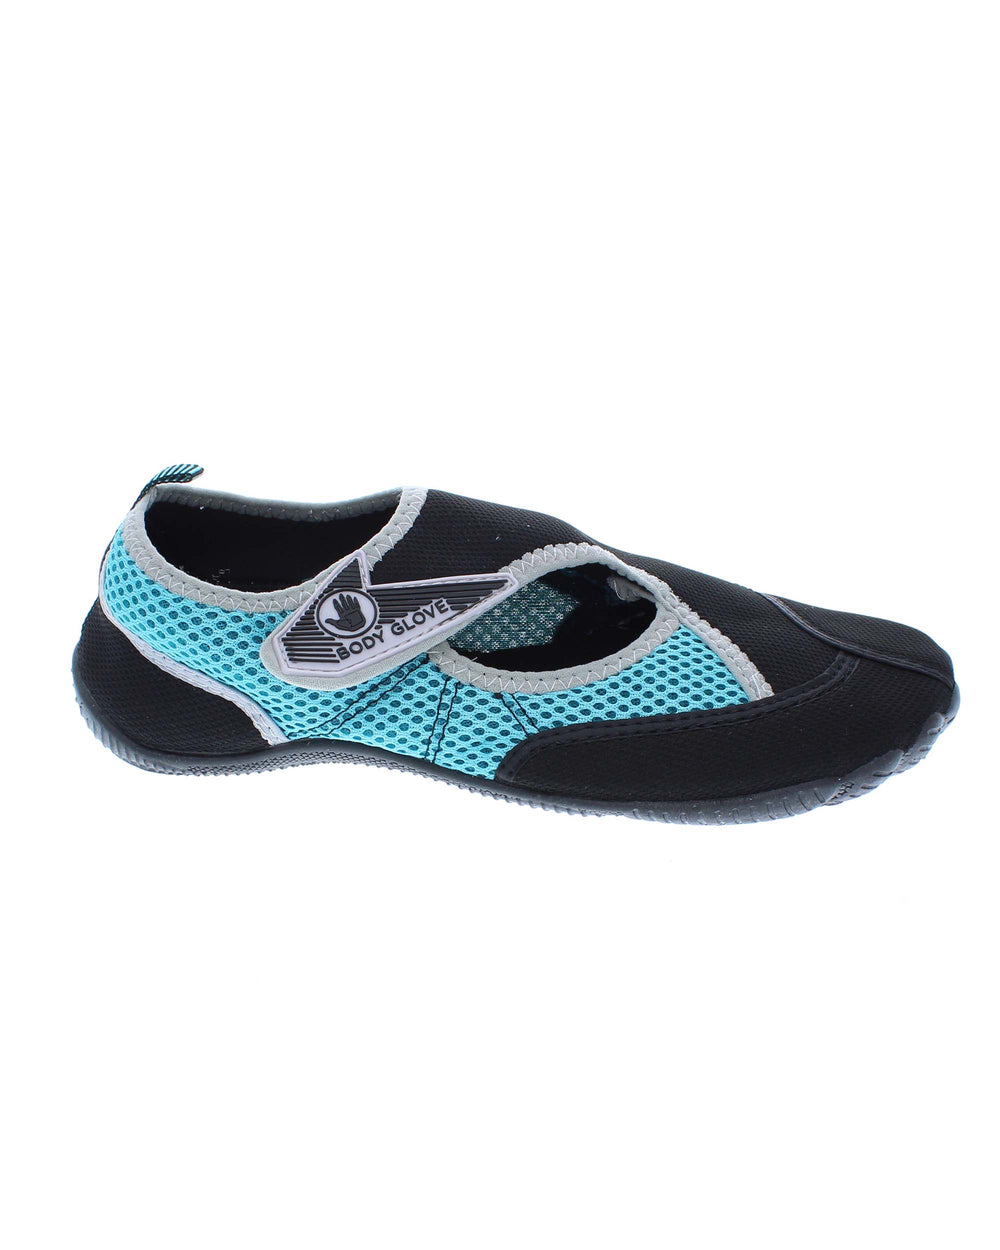 Women's Horizon Water Shoes - Black/Oasis Blue